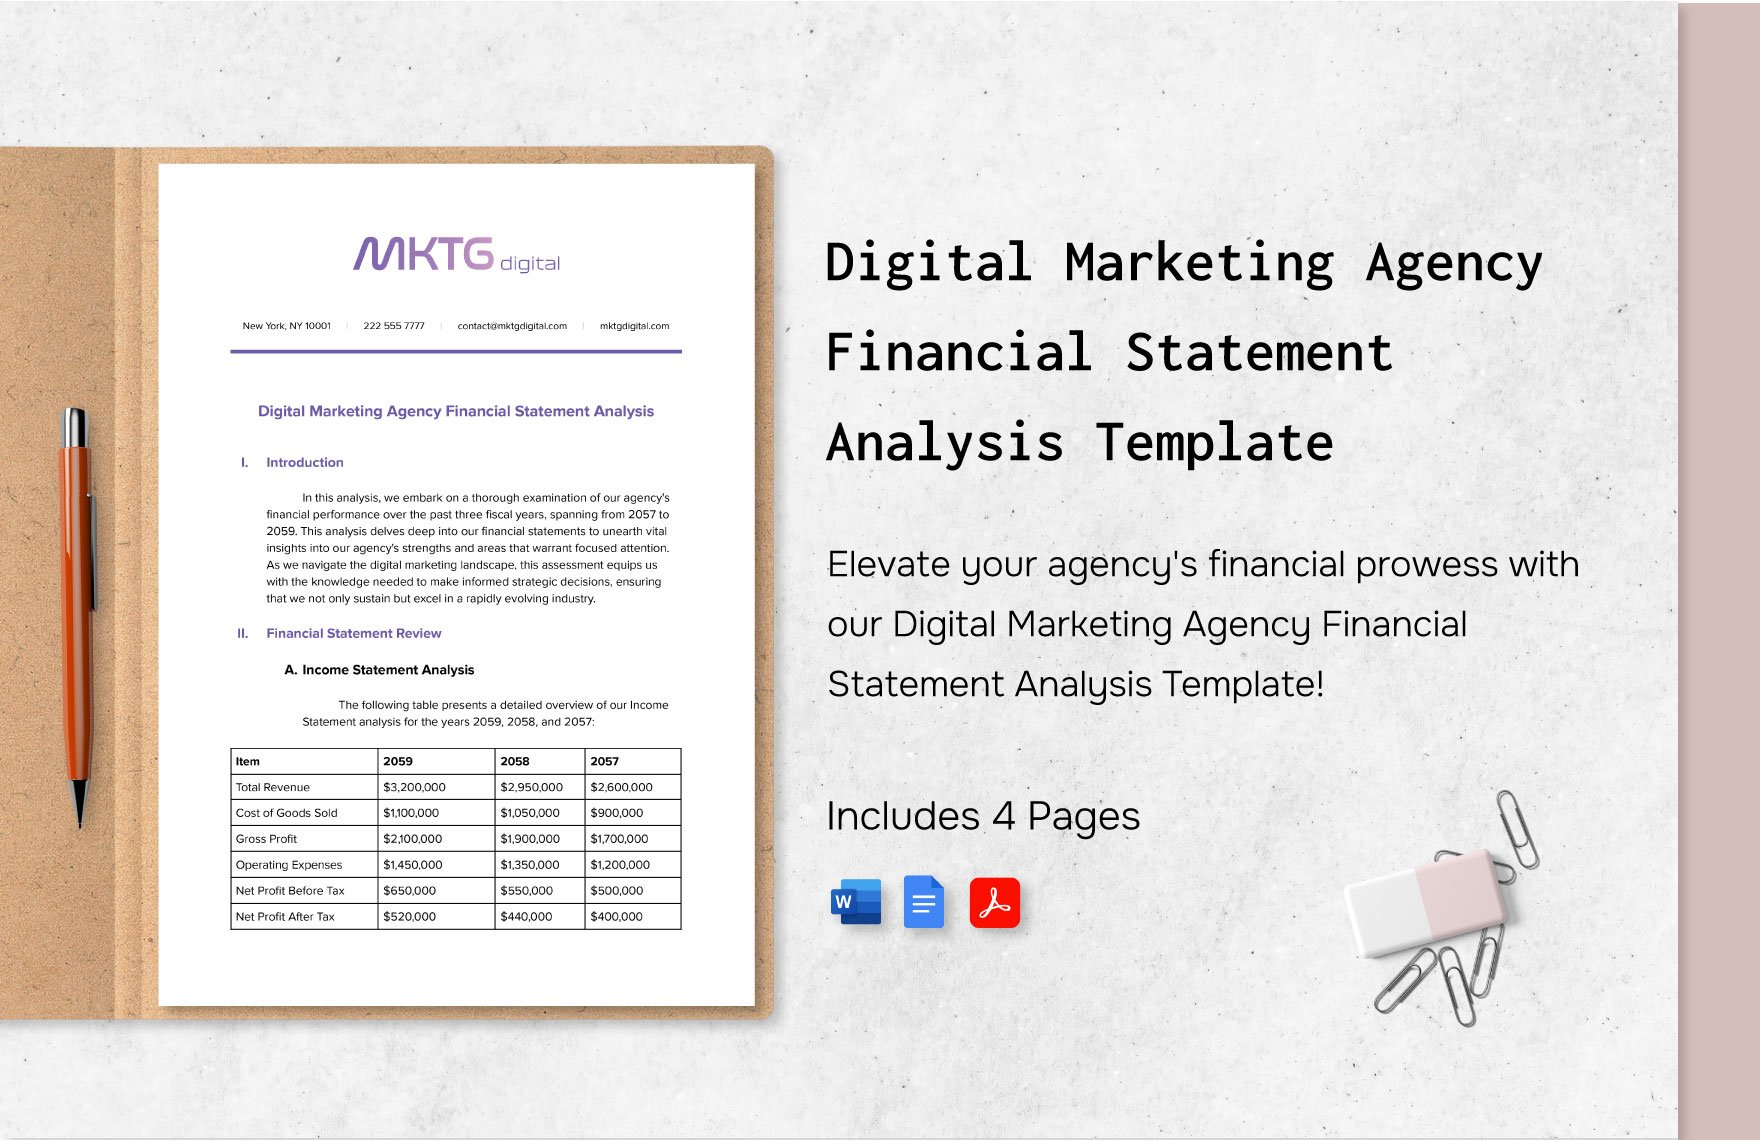 Digital Marketing Agency Financial Statement Analysis Template